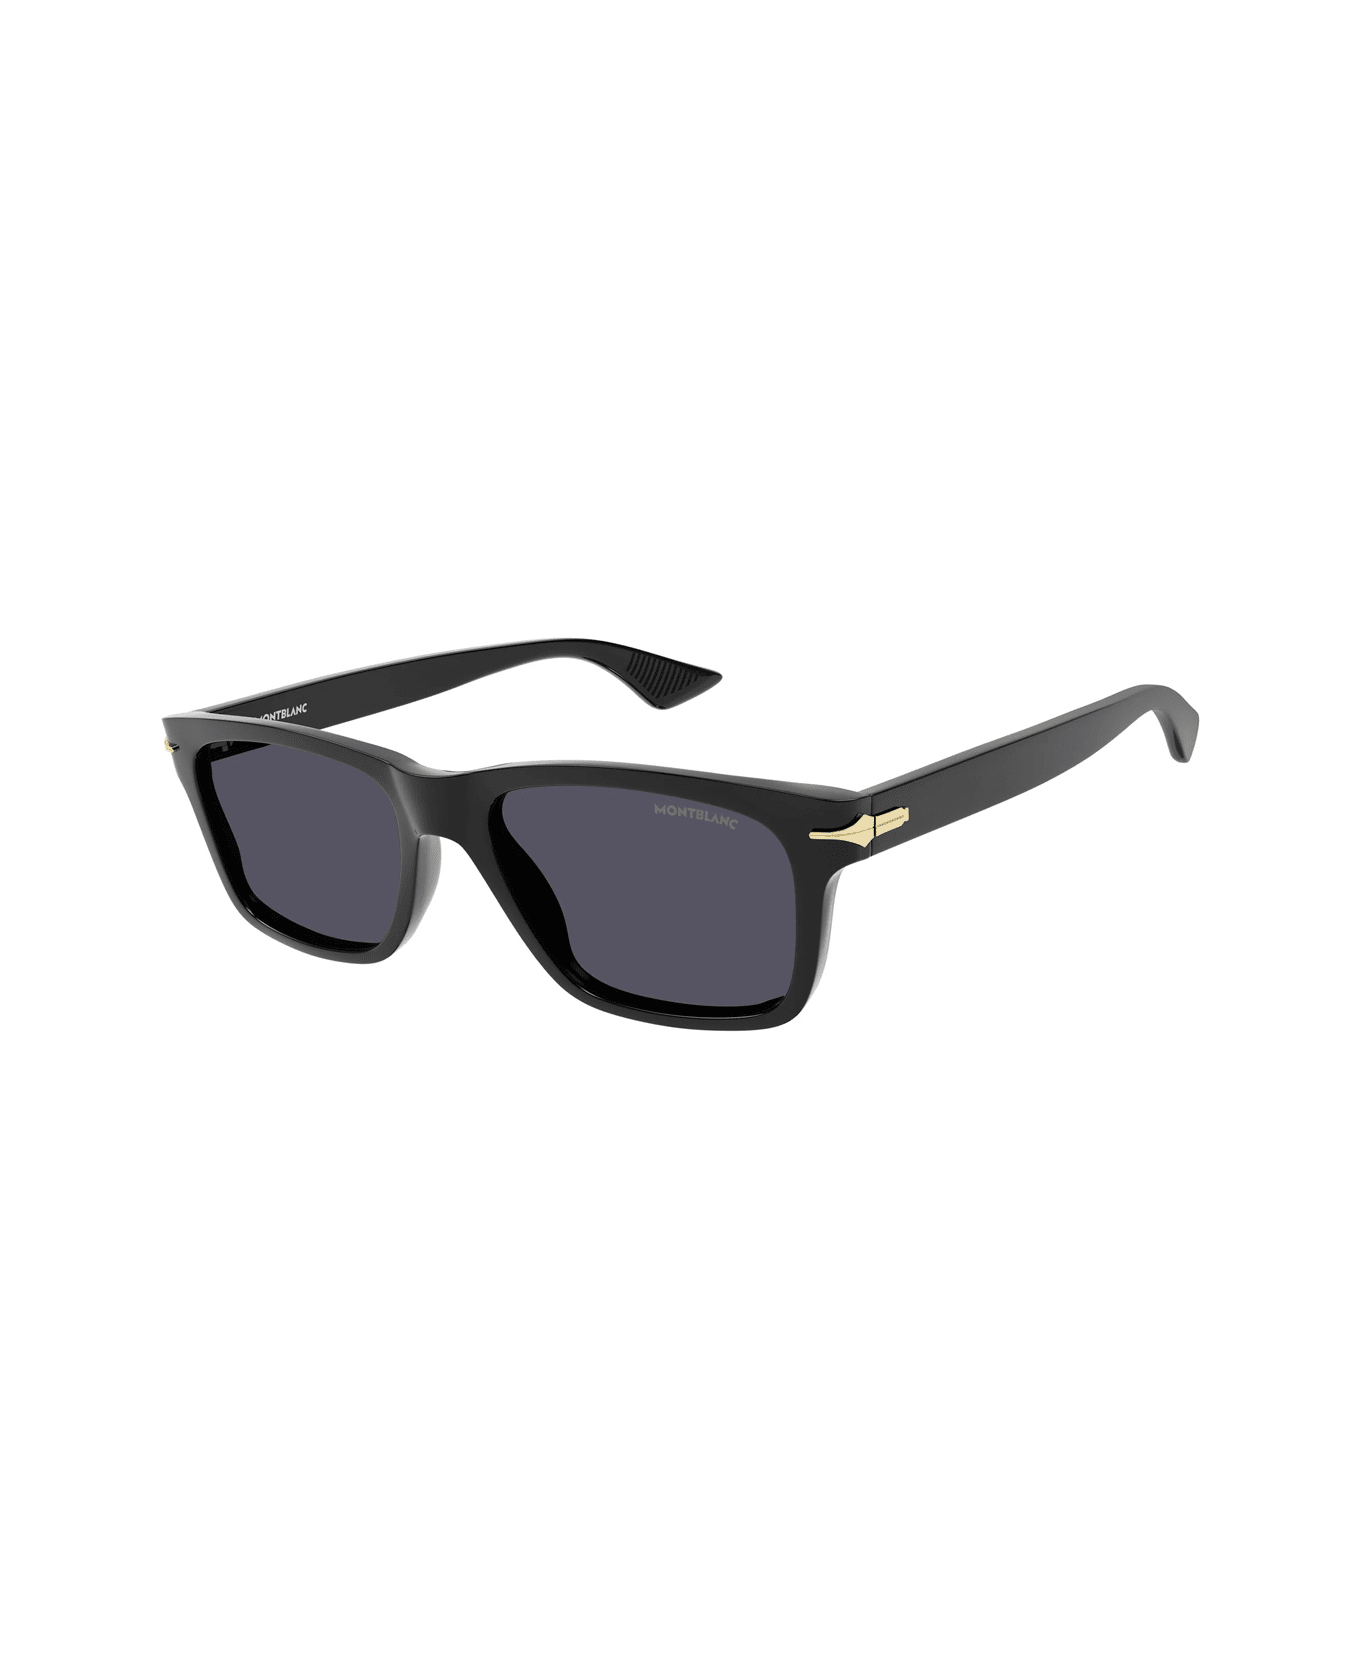 Montblanc Mb0263s Linea Nib 001 Sunglasses - Nero サングラス